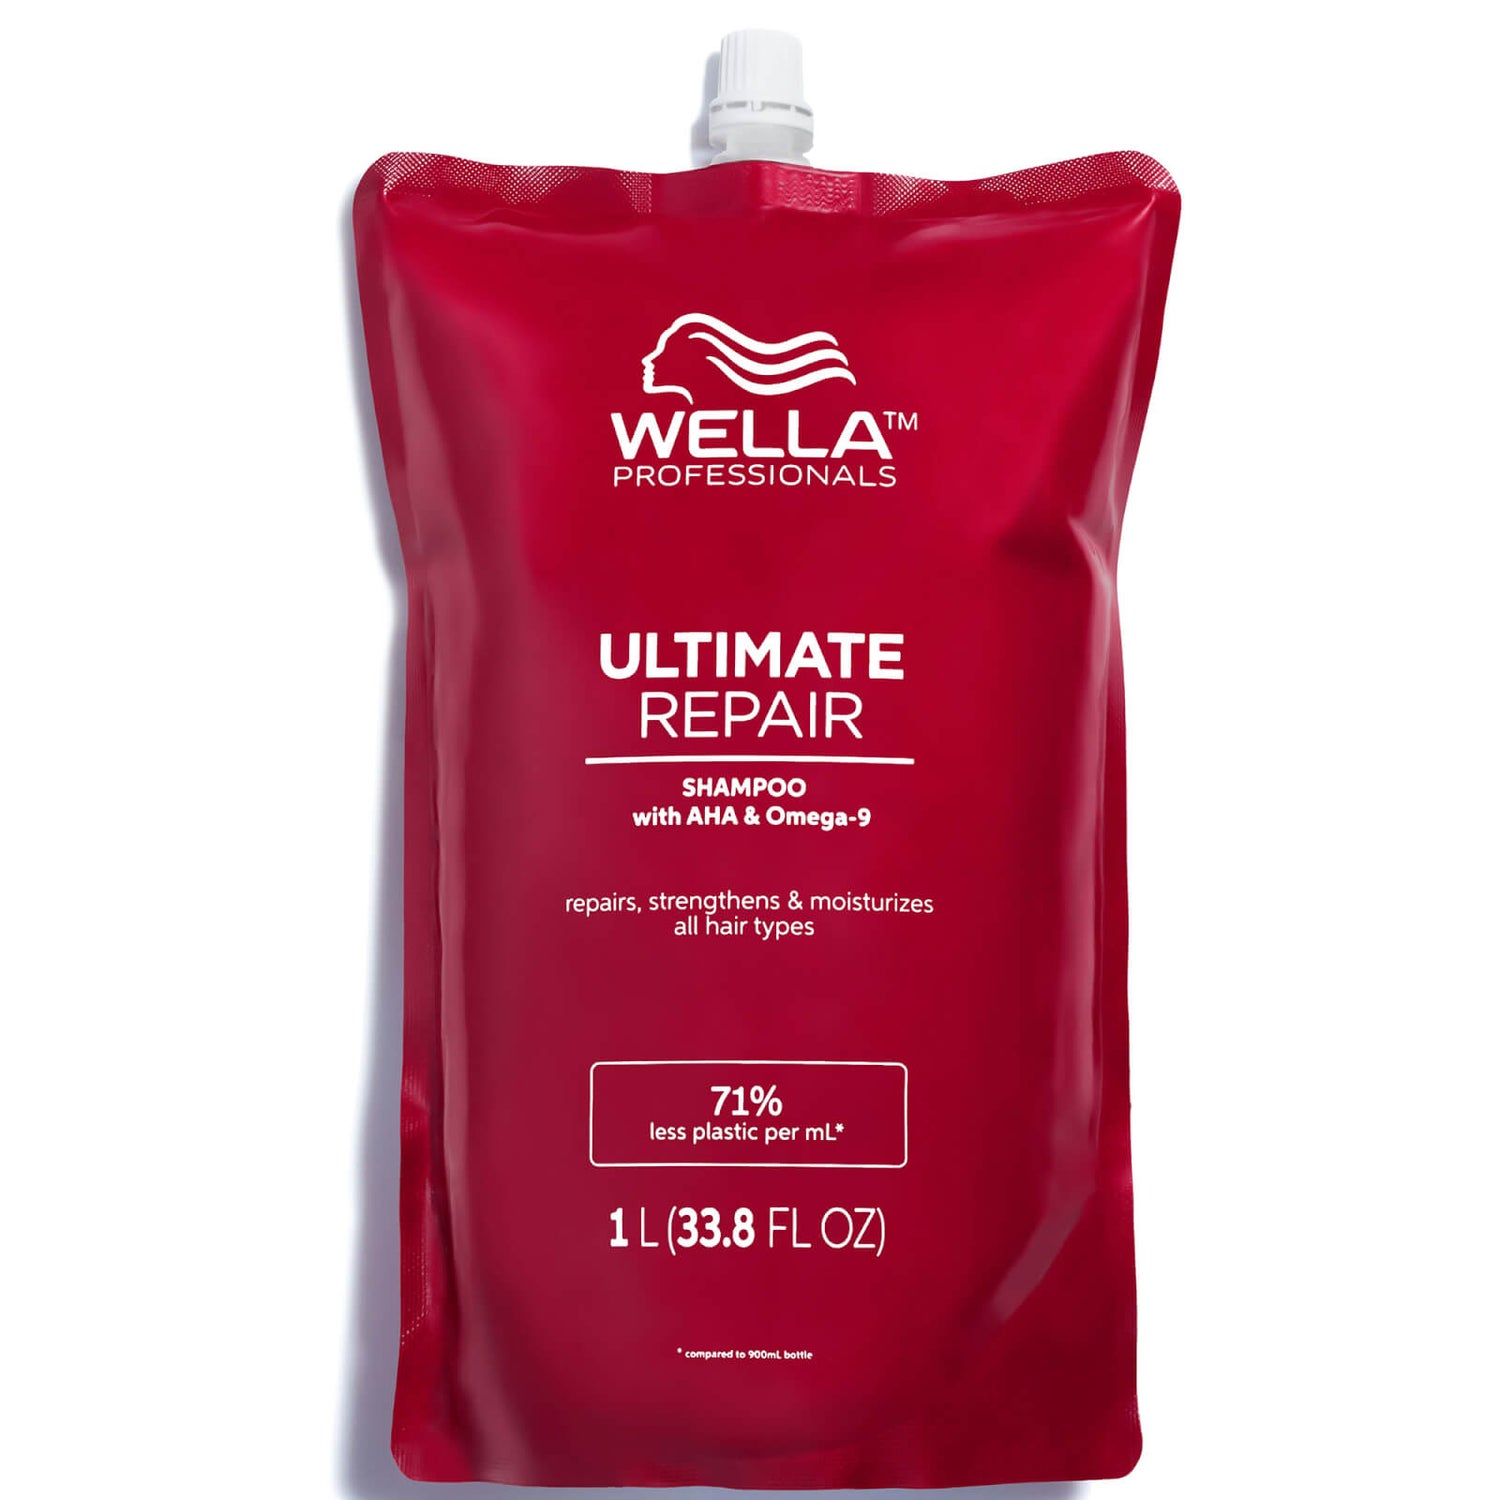 Wella Professionals Care Ultimate Repair - Shampoo Pouch 1L